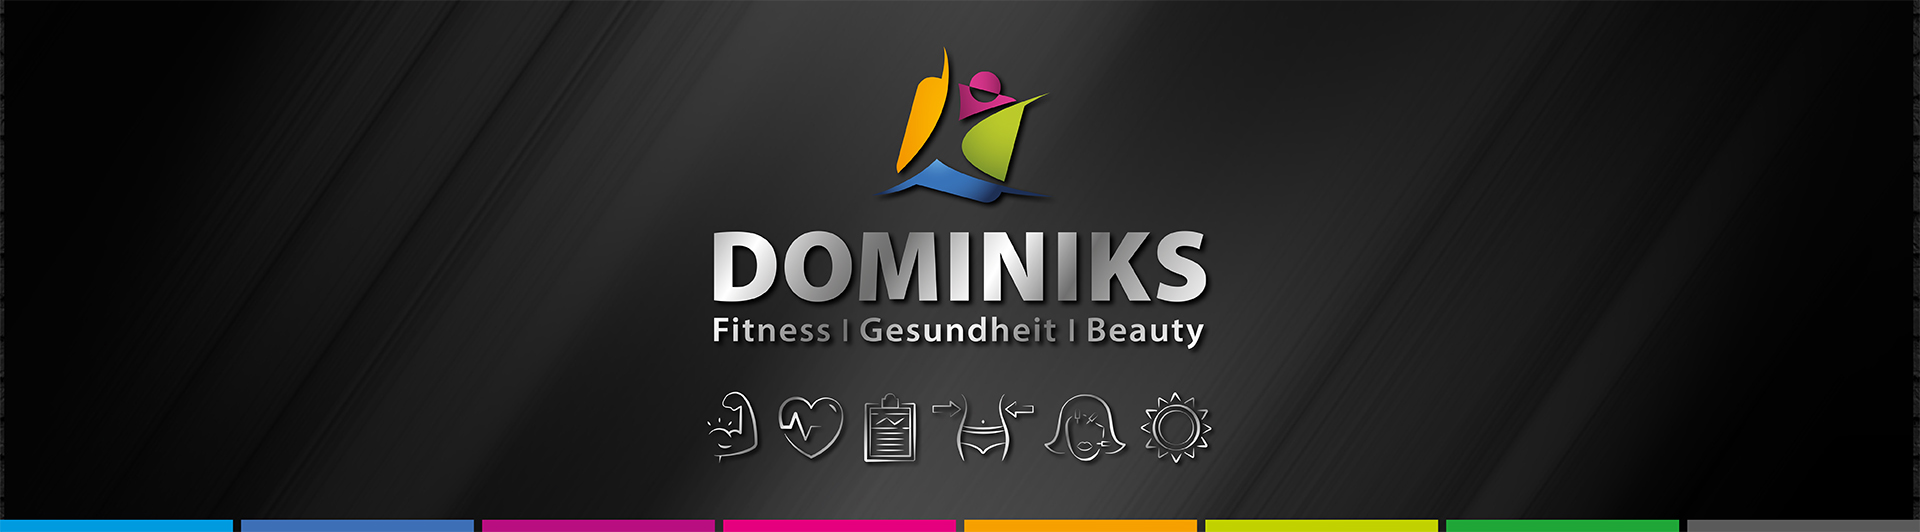 DOMINIKS-STUDIOS_Fitness-Gesundheit-Beauty